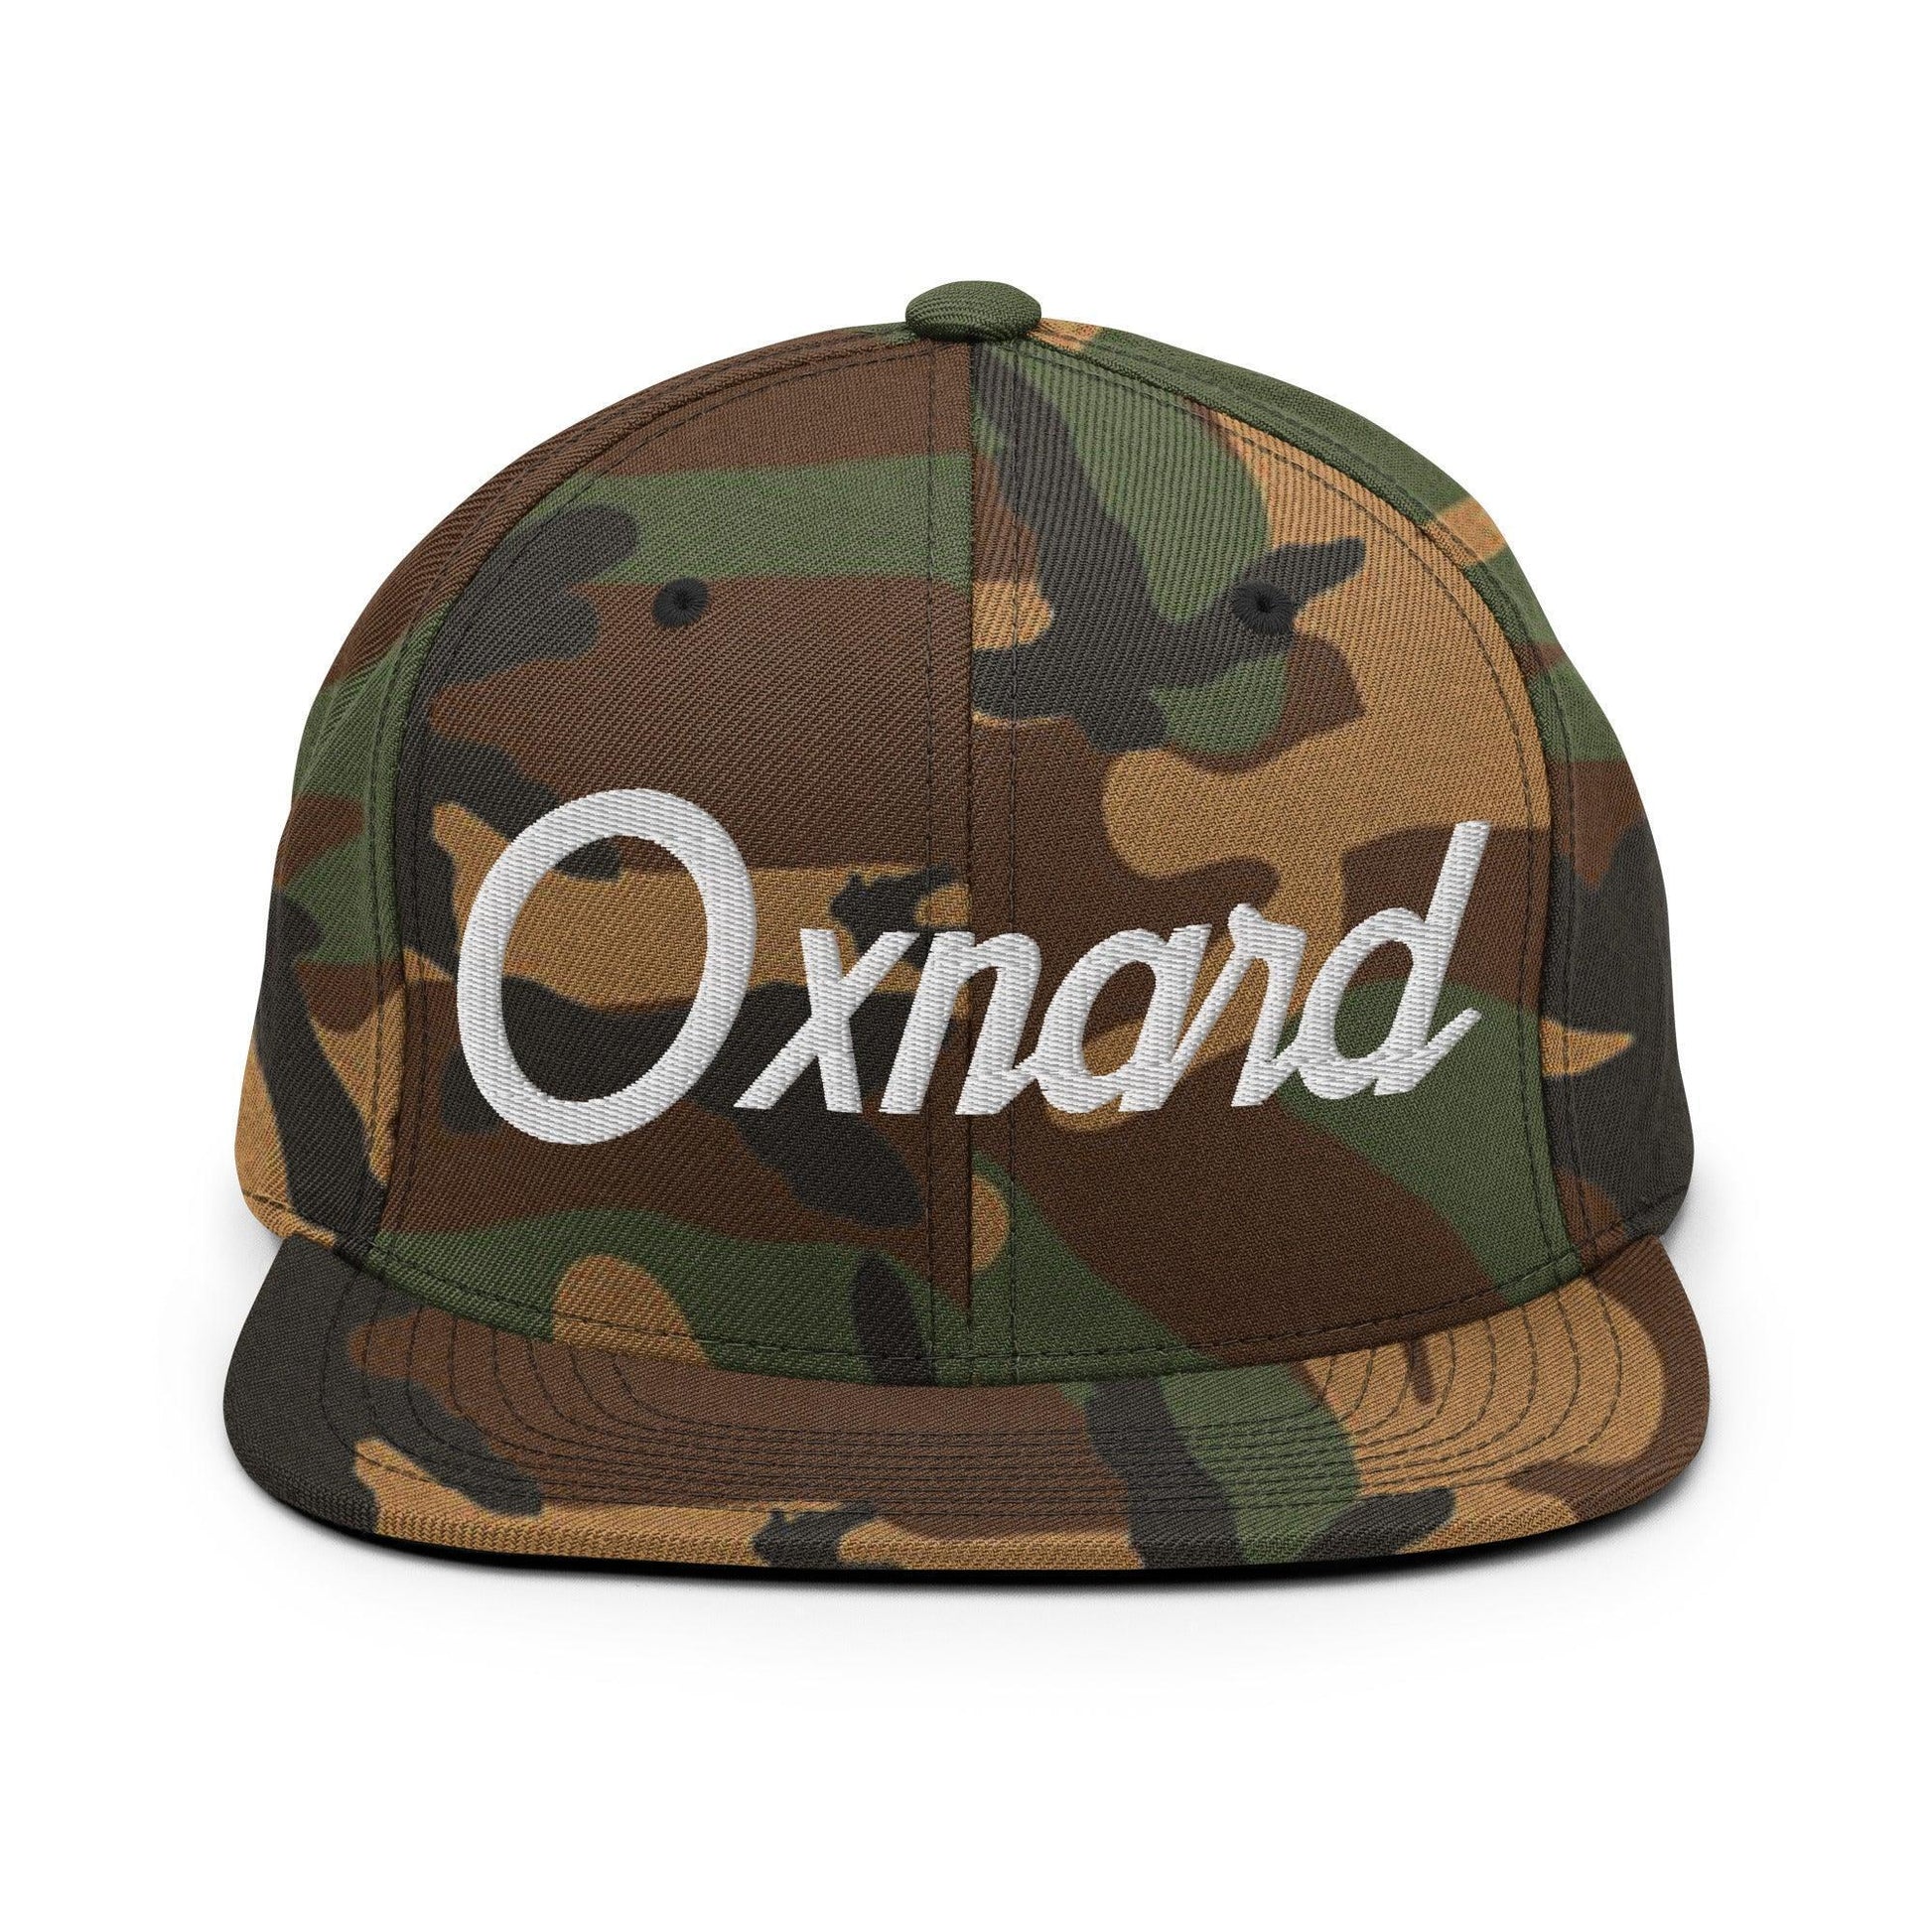 Oxnard Script Snapback Hat Green Camo